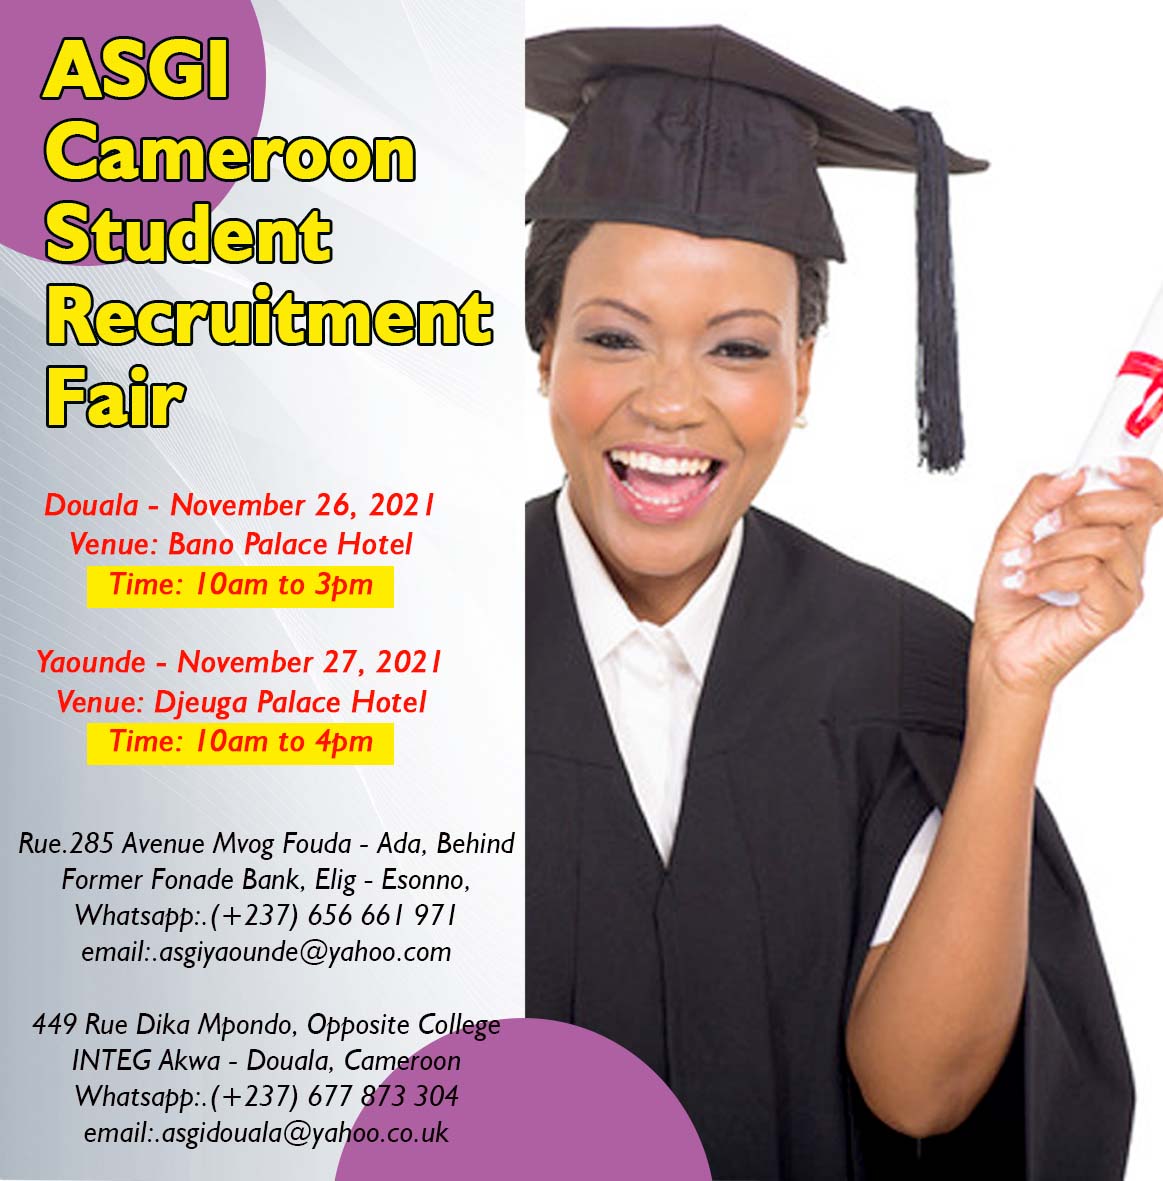 ASGI Cameroon Student Recruitment Fair